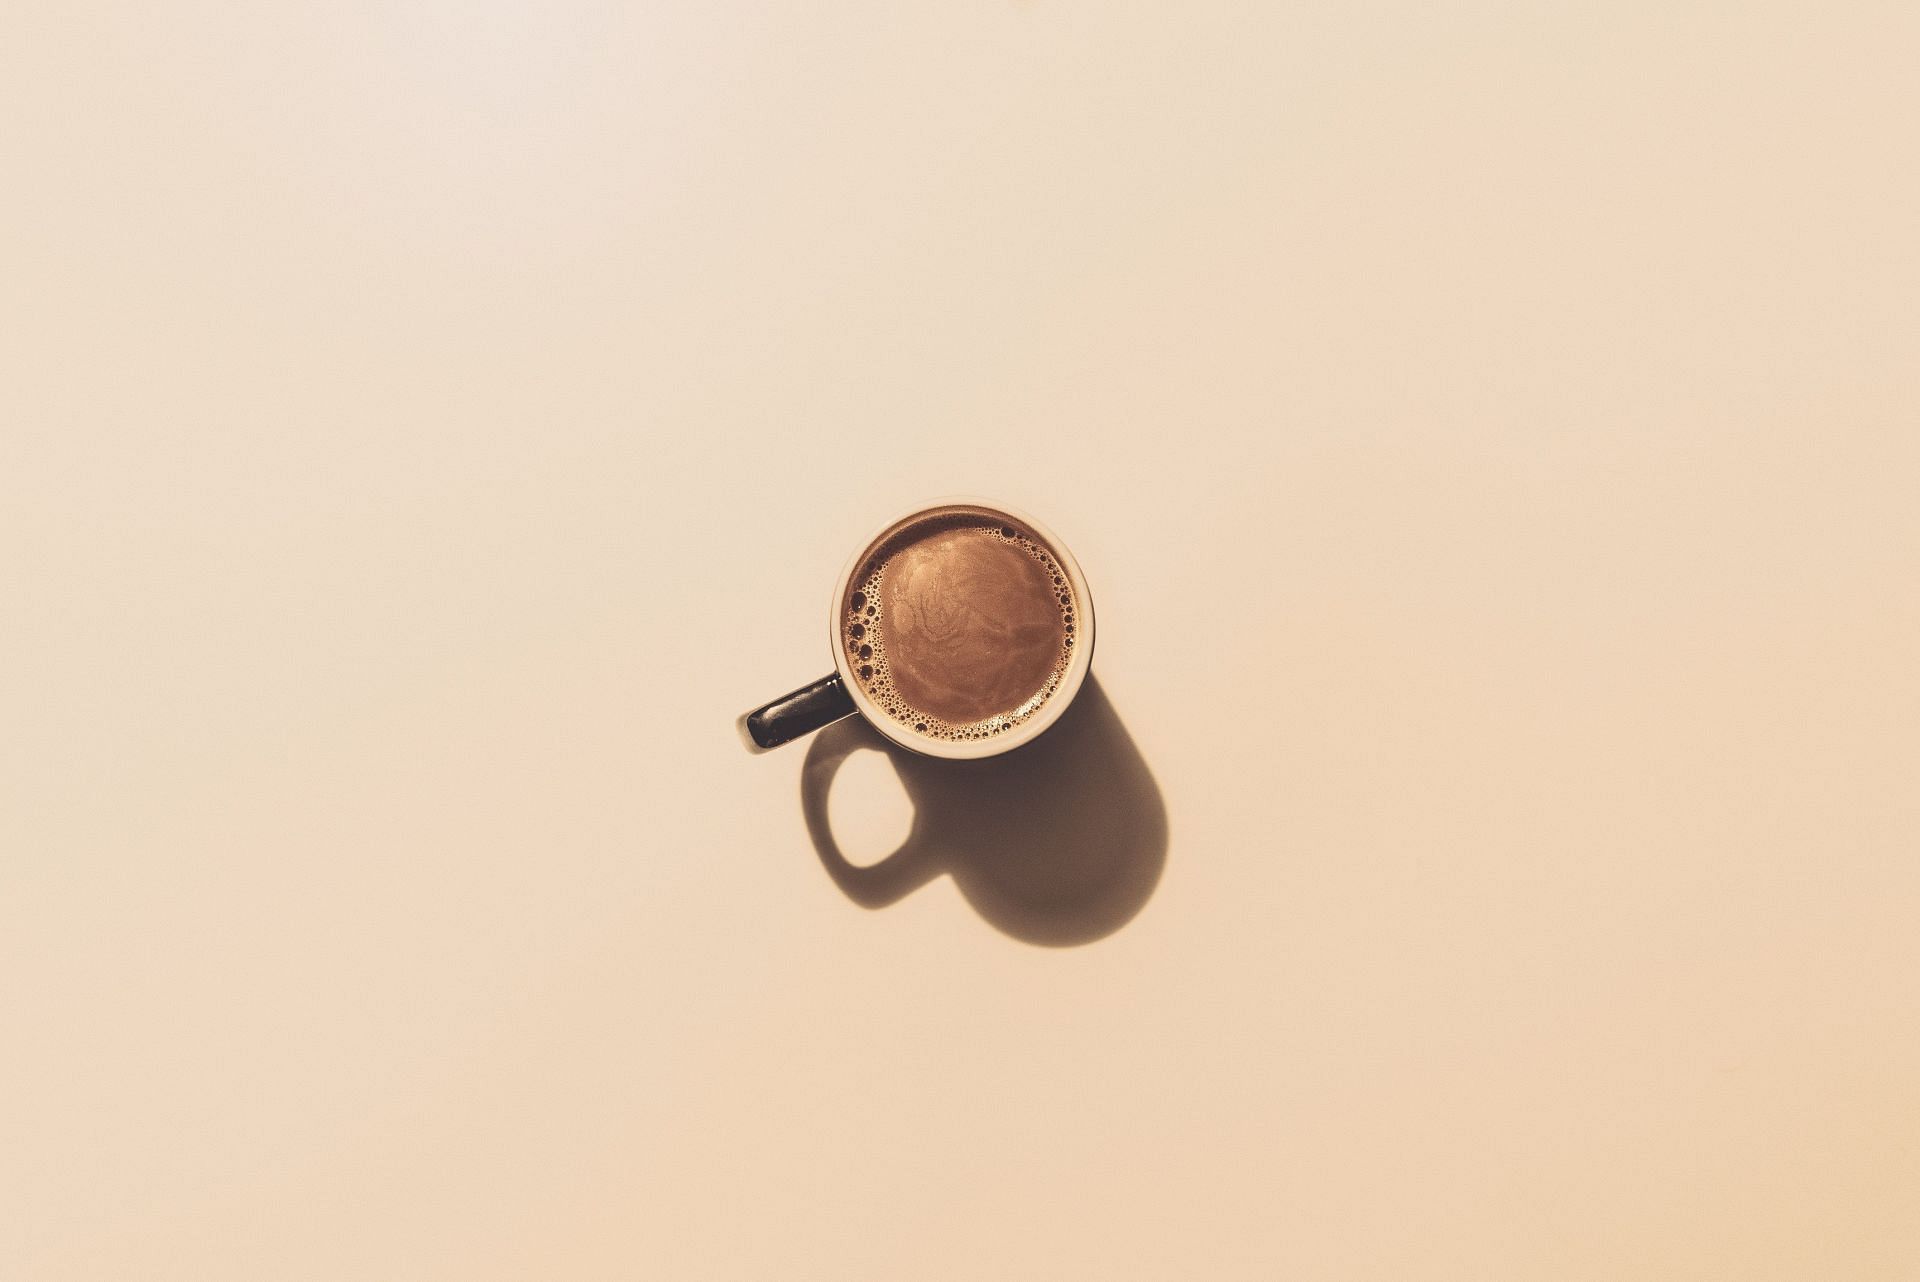 red eye is a caffeinated coffee drink. (Image via Unsplash / Jakub Dziubak)